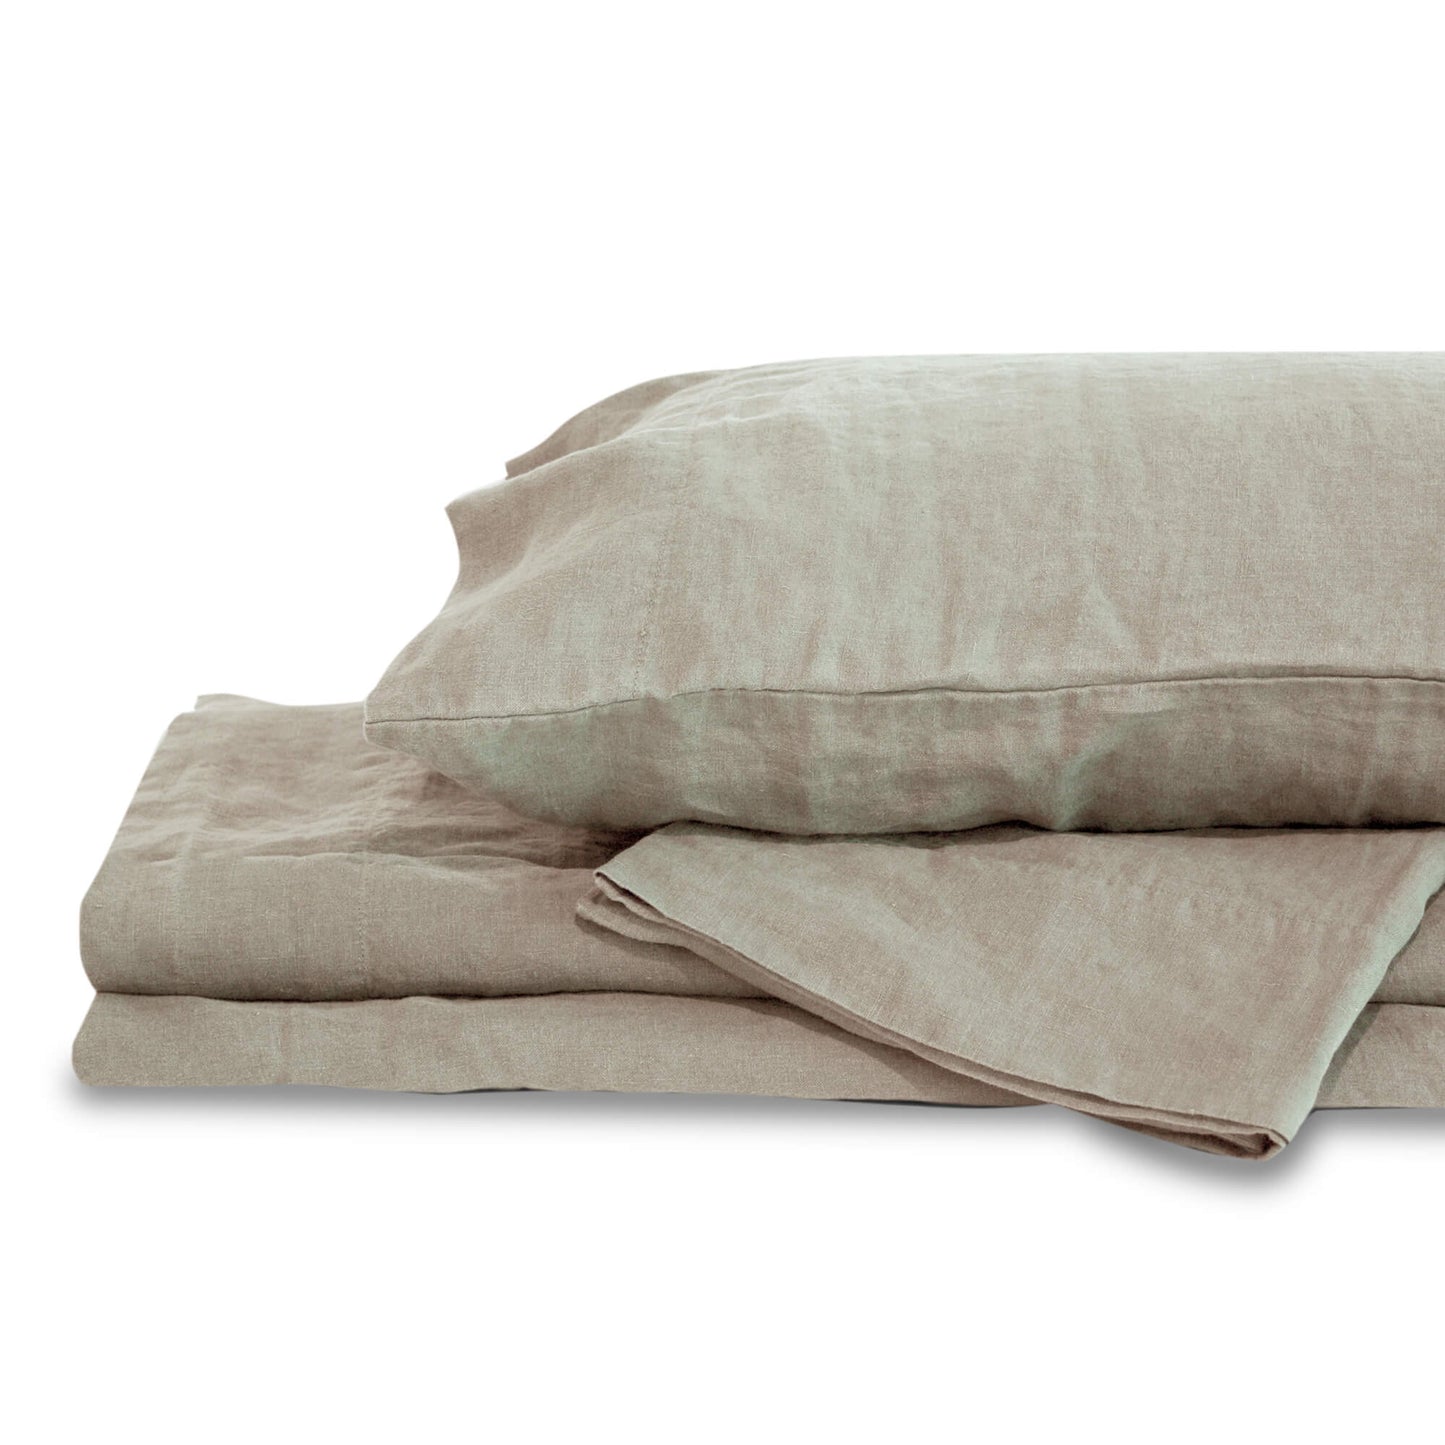 Delilah Home 100% Hemp Bed Sheets
Jungle Pillows